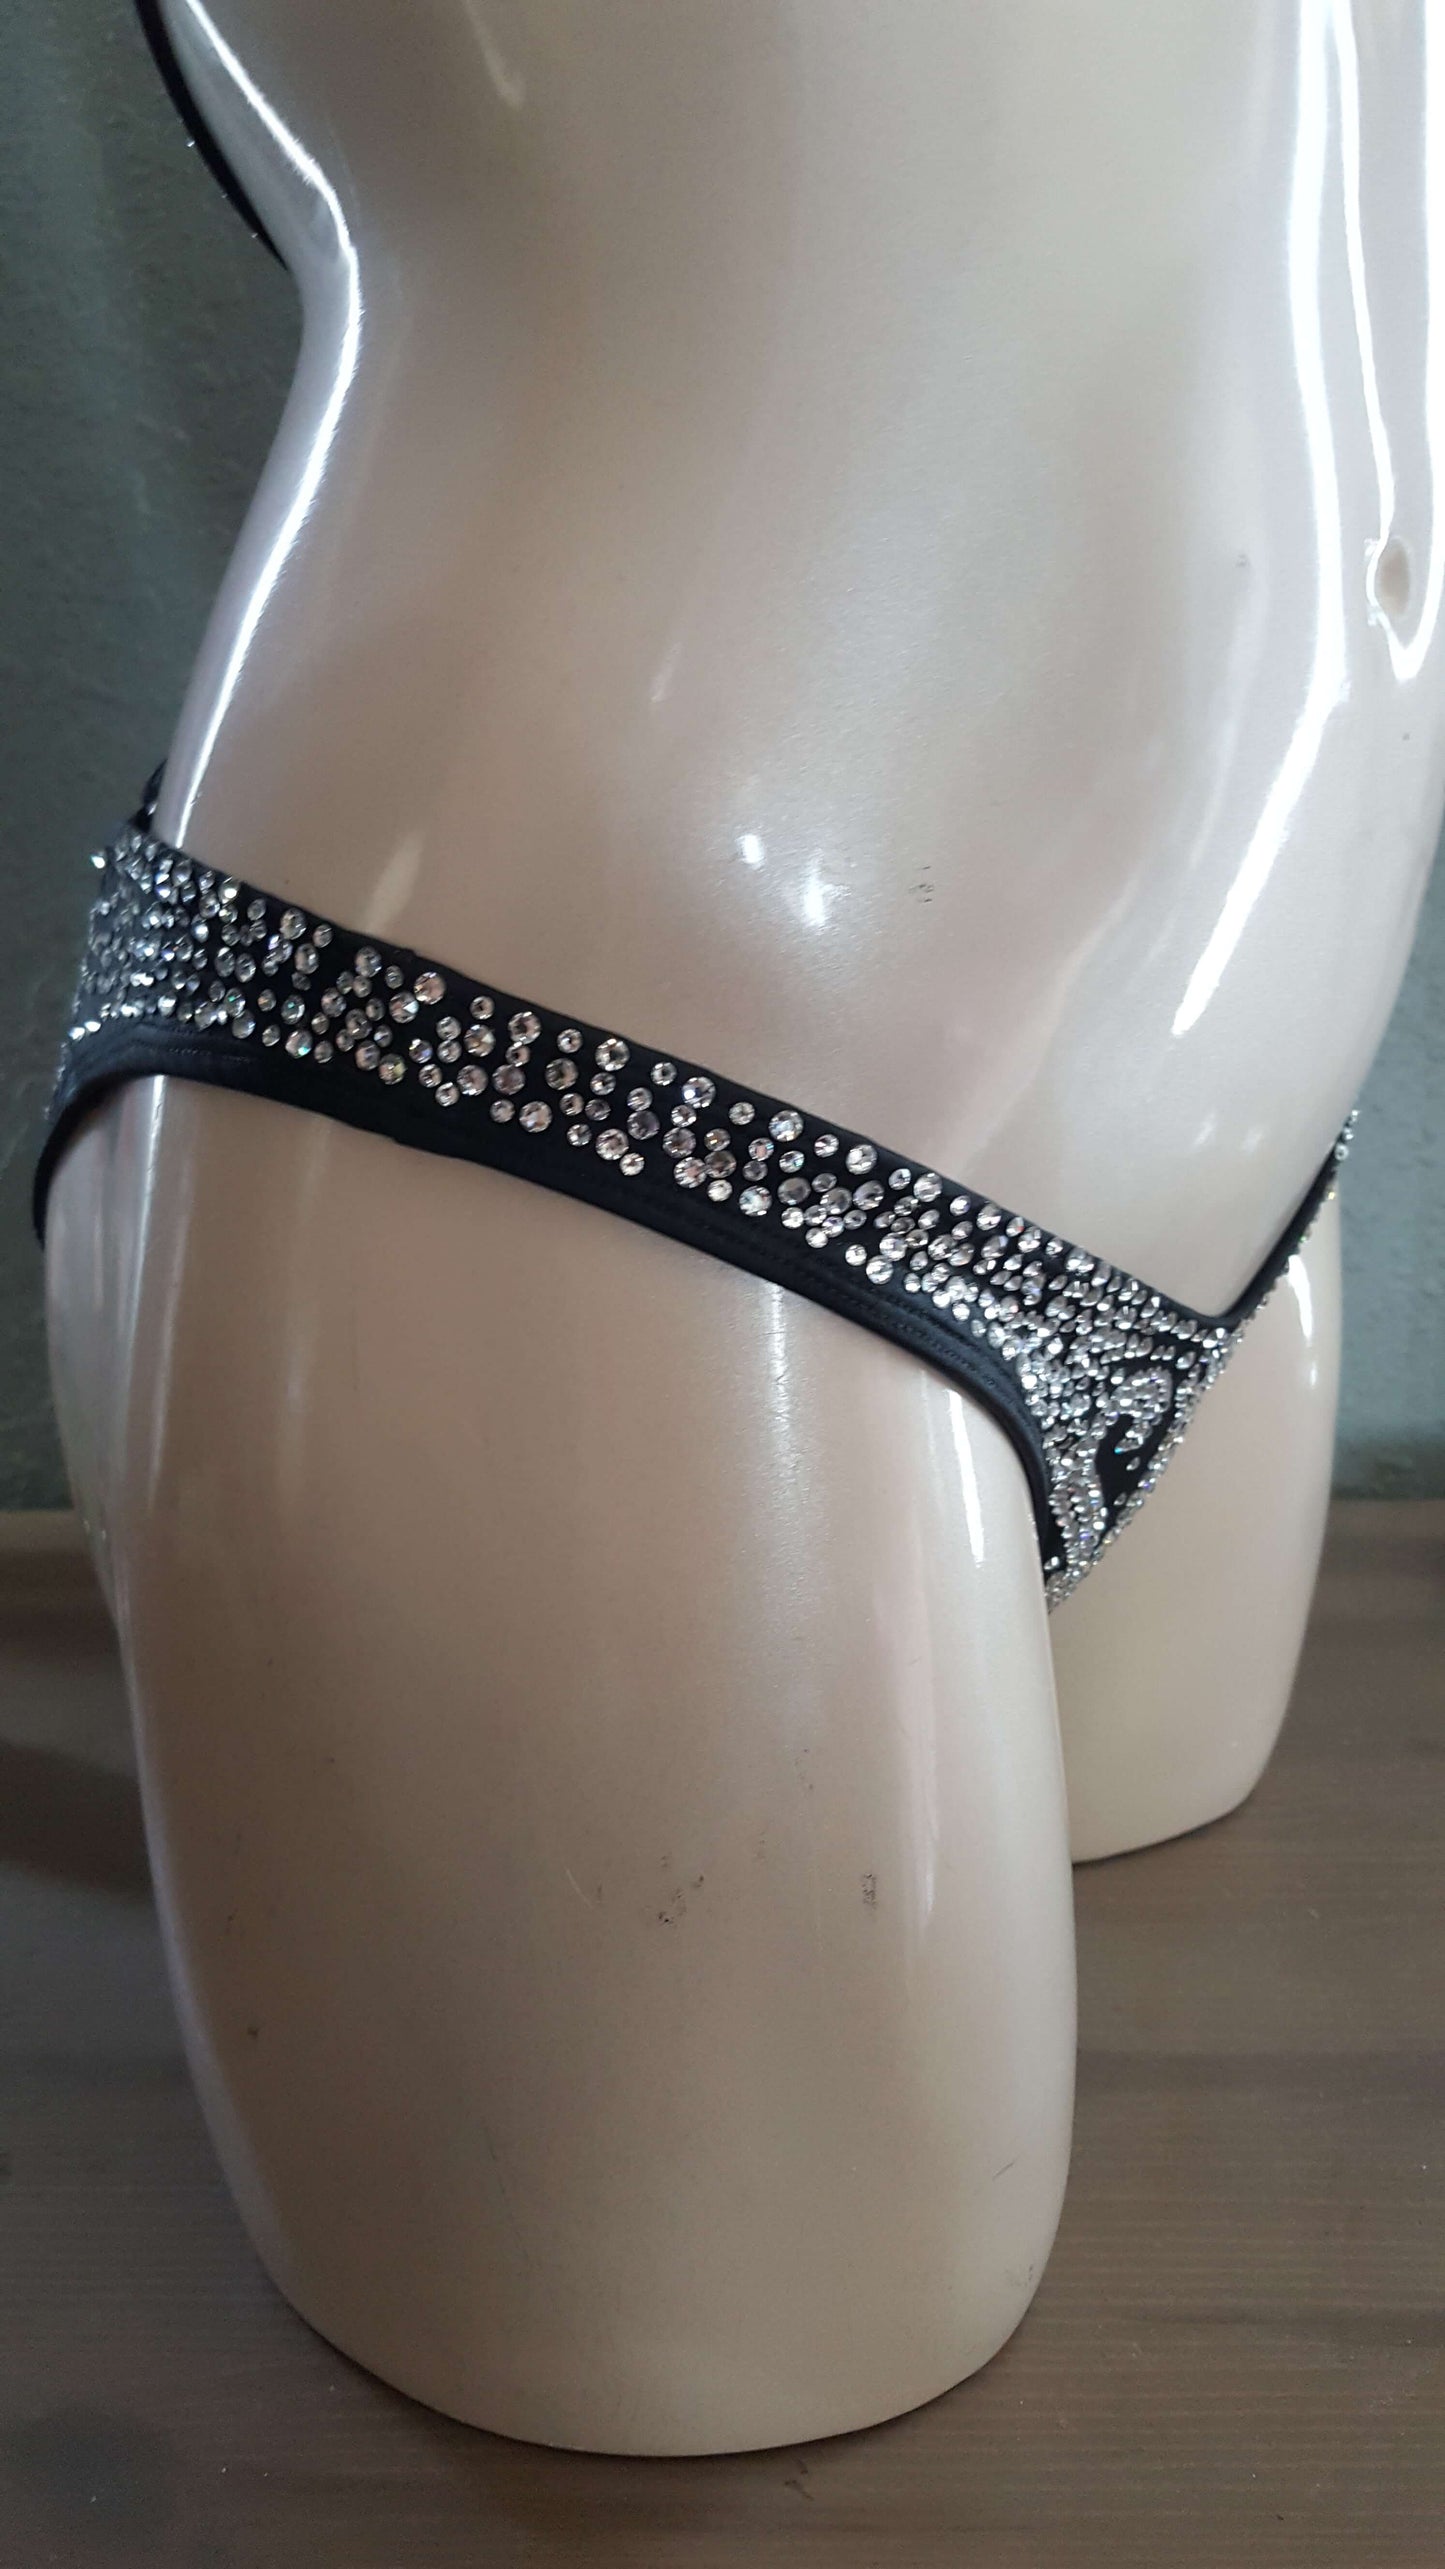 Black bikini with crystal rhinestone in a Celtic design